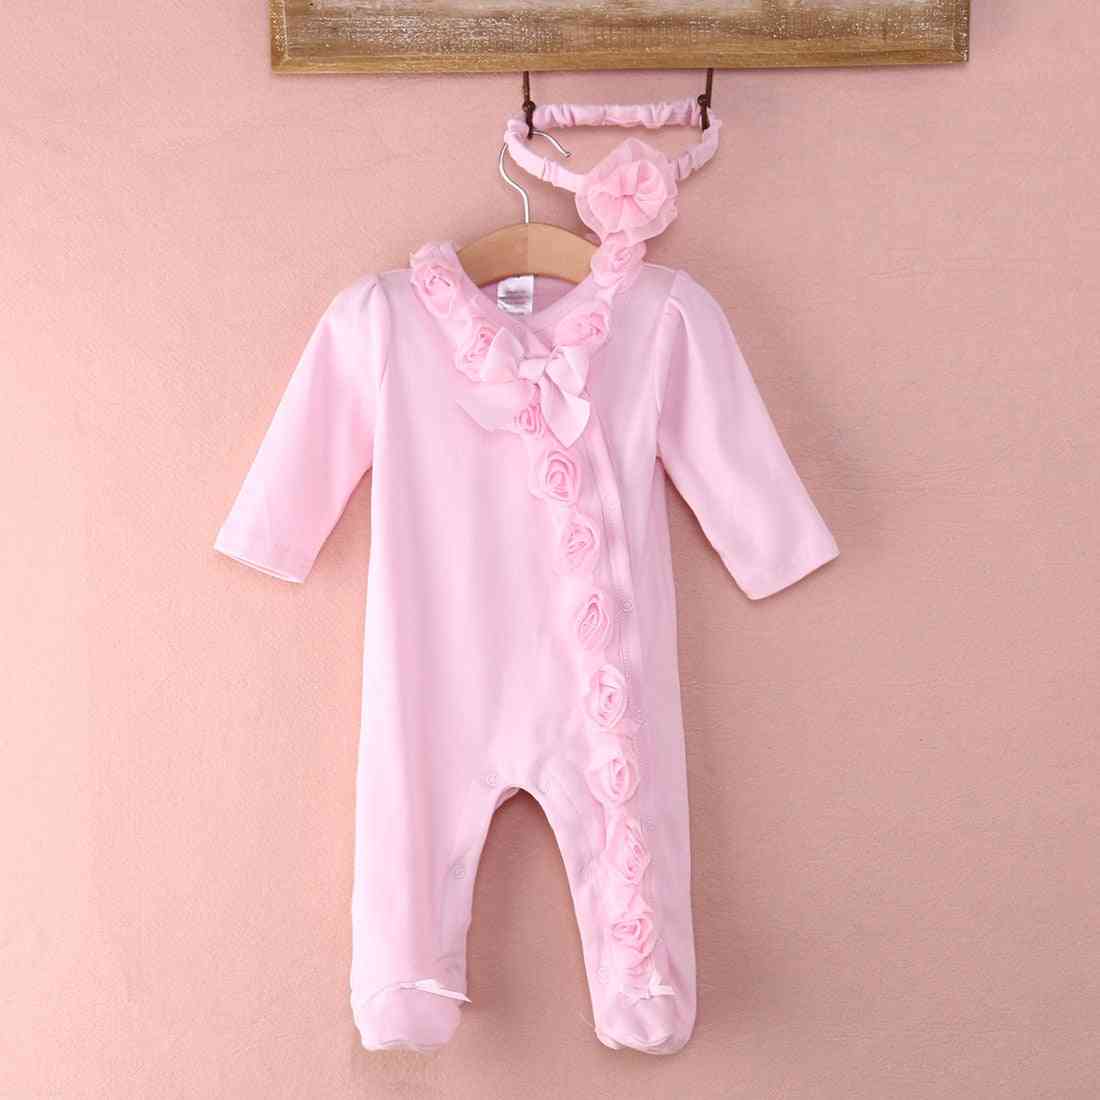 Mameluco de manga larga para niñas recién nacidas, mono de flores tridimensional, conjuntos de ropa, diadema adjunta - 0-3 meses